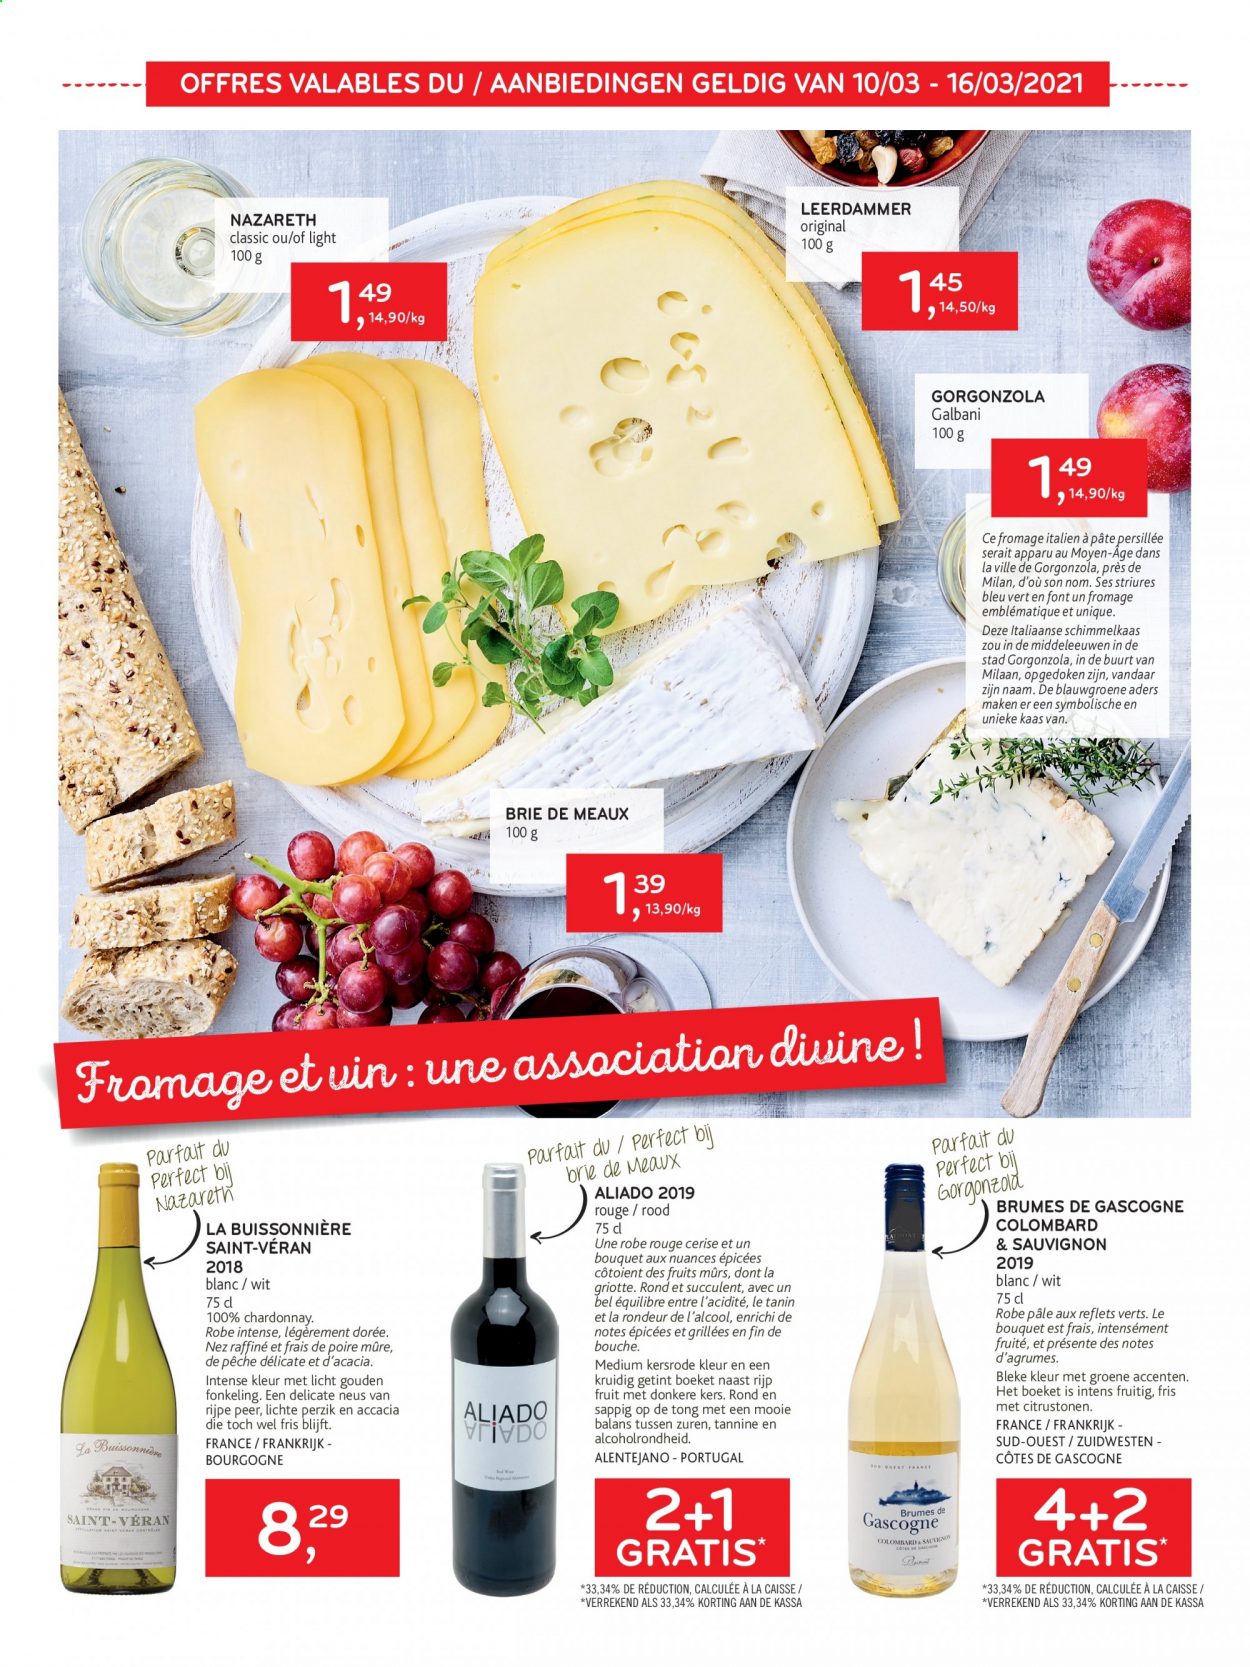 thumbnail - Alvo-aanbieding - 10/03/2021 - 23/03/2021 -  producten in de aanbieding - Chardonnay, kaas, Leerdammer, peer, perzik, Gorgonzola, Côtes de Gascogne, Brie. Pagina 2.